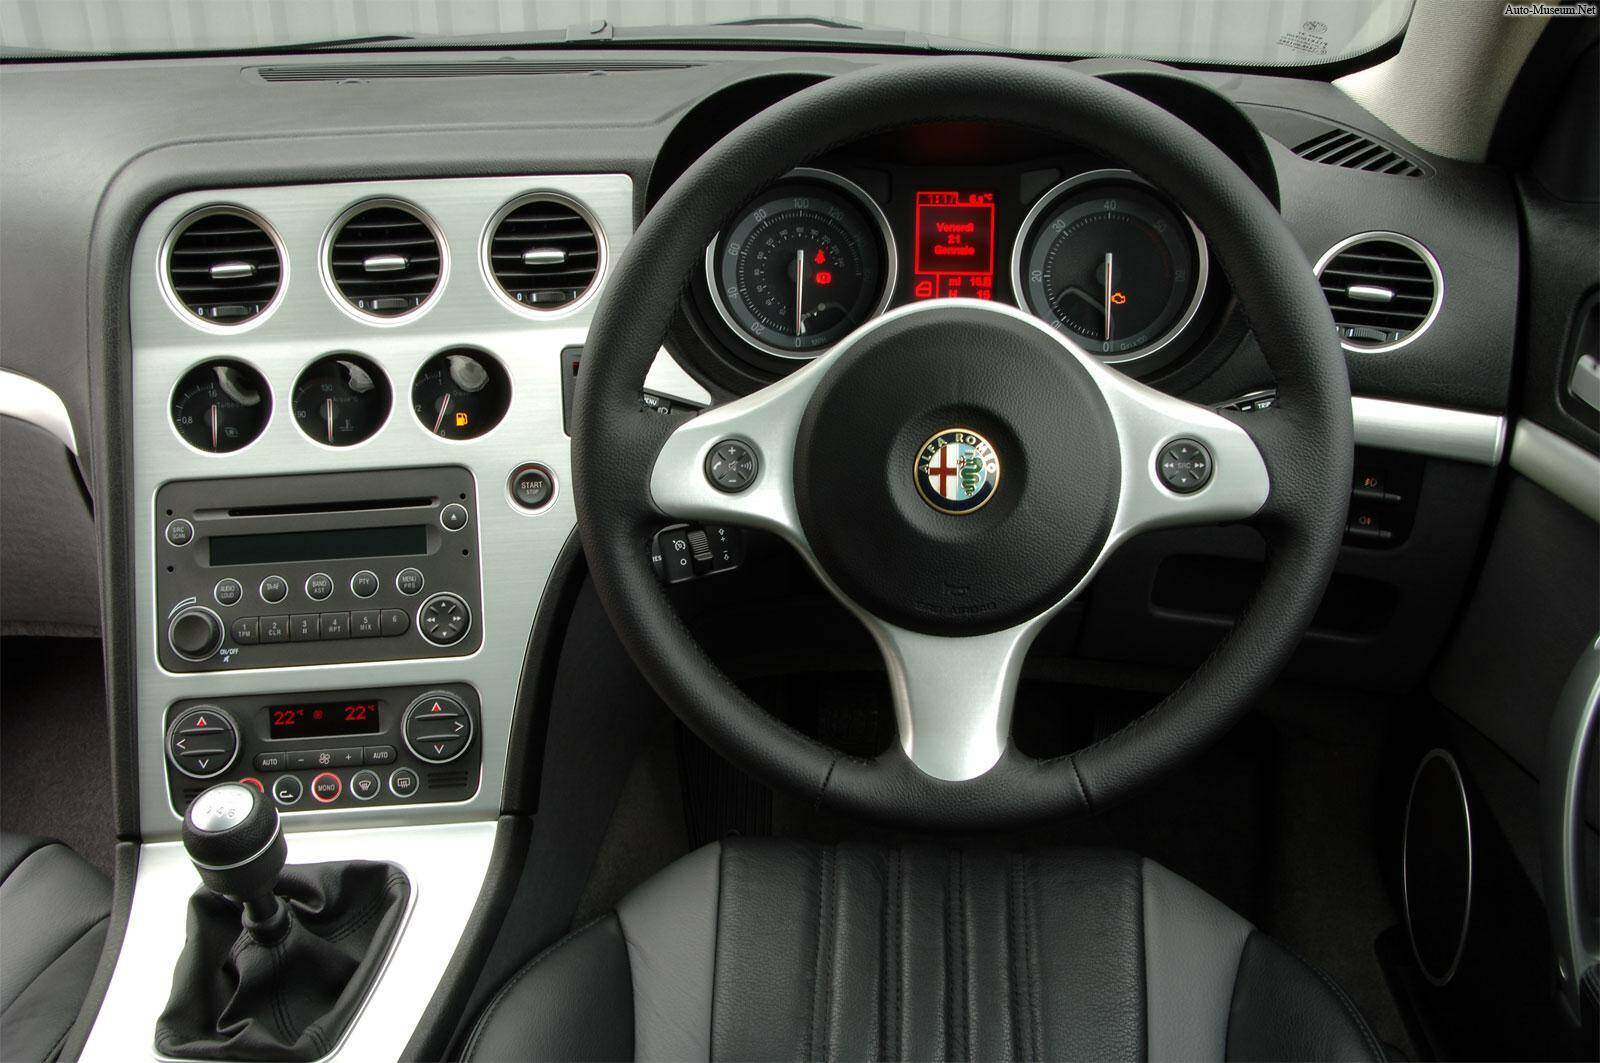 Alfa Romeo Brera 3.2 JTS 260 (939) (2006-2011),  ajouté par nicolasv94